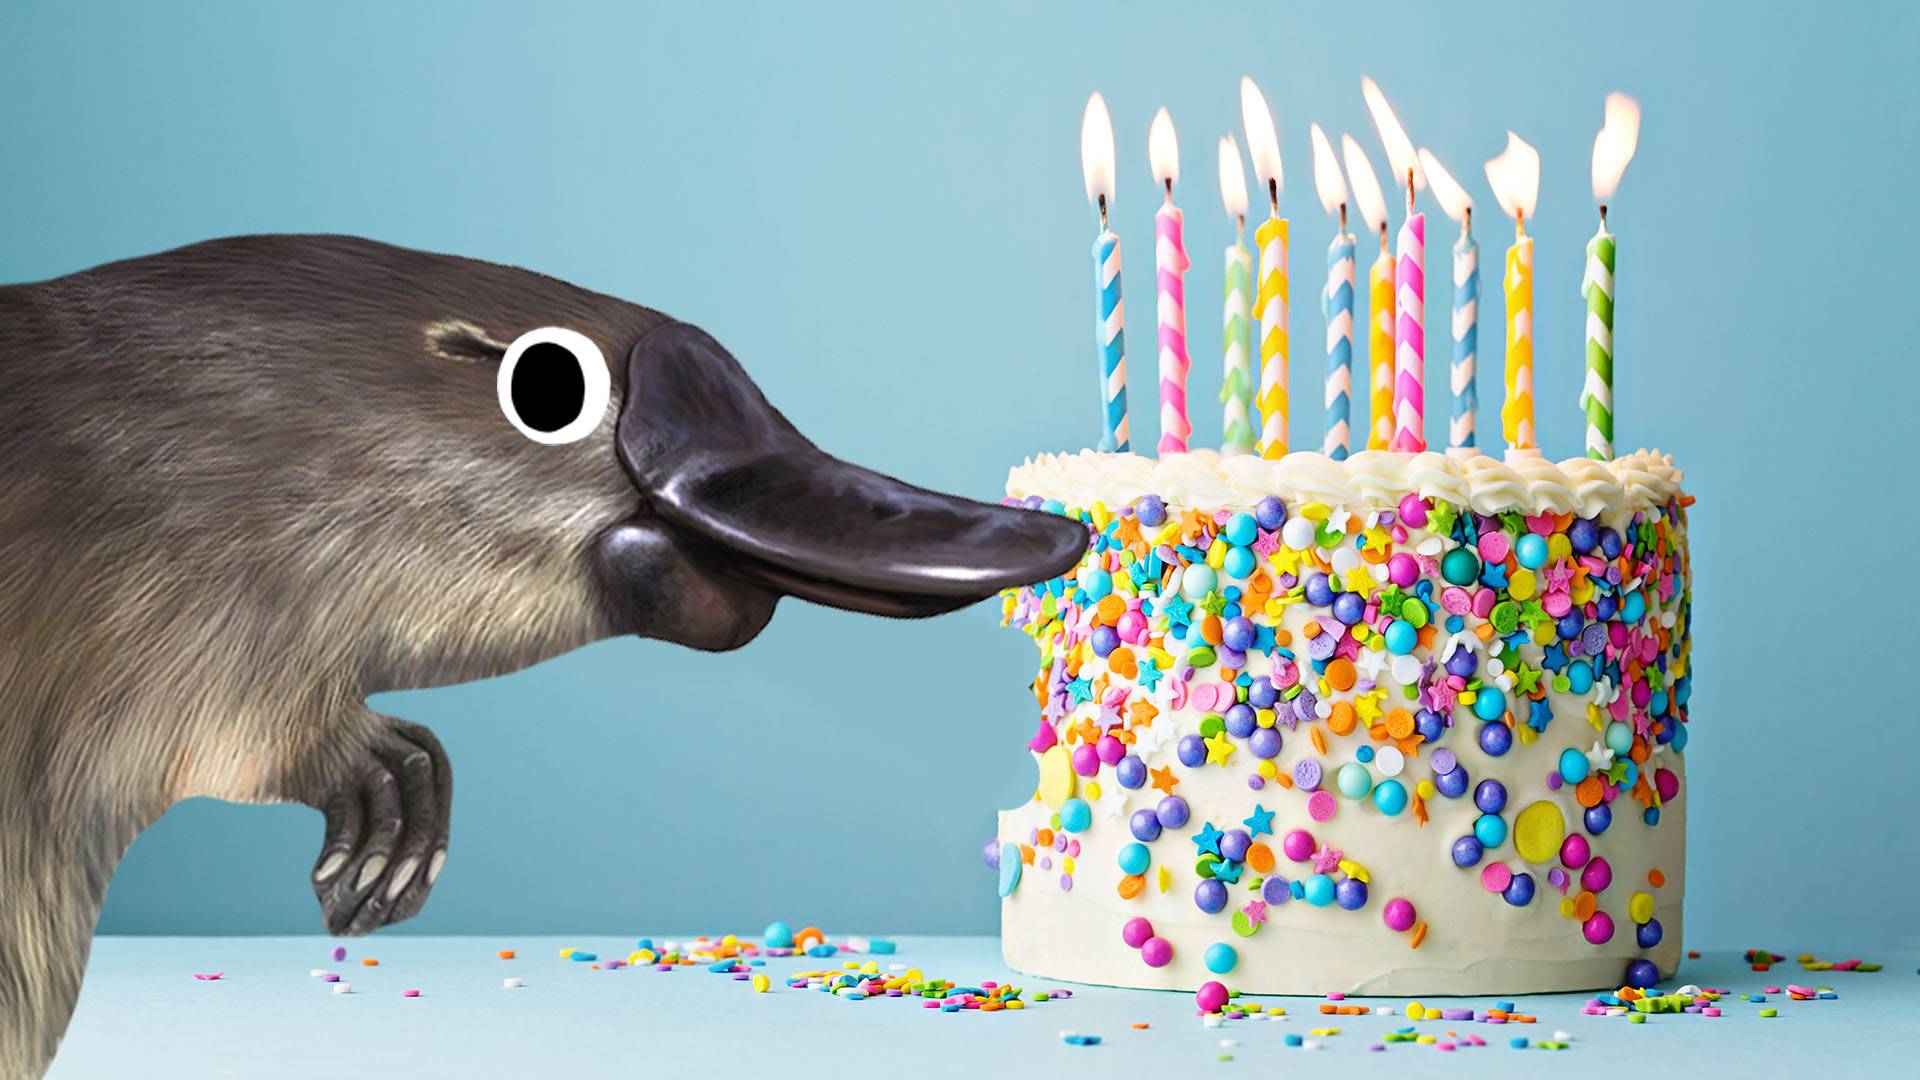 Platypus eating a birthday cake